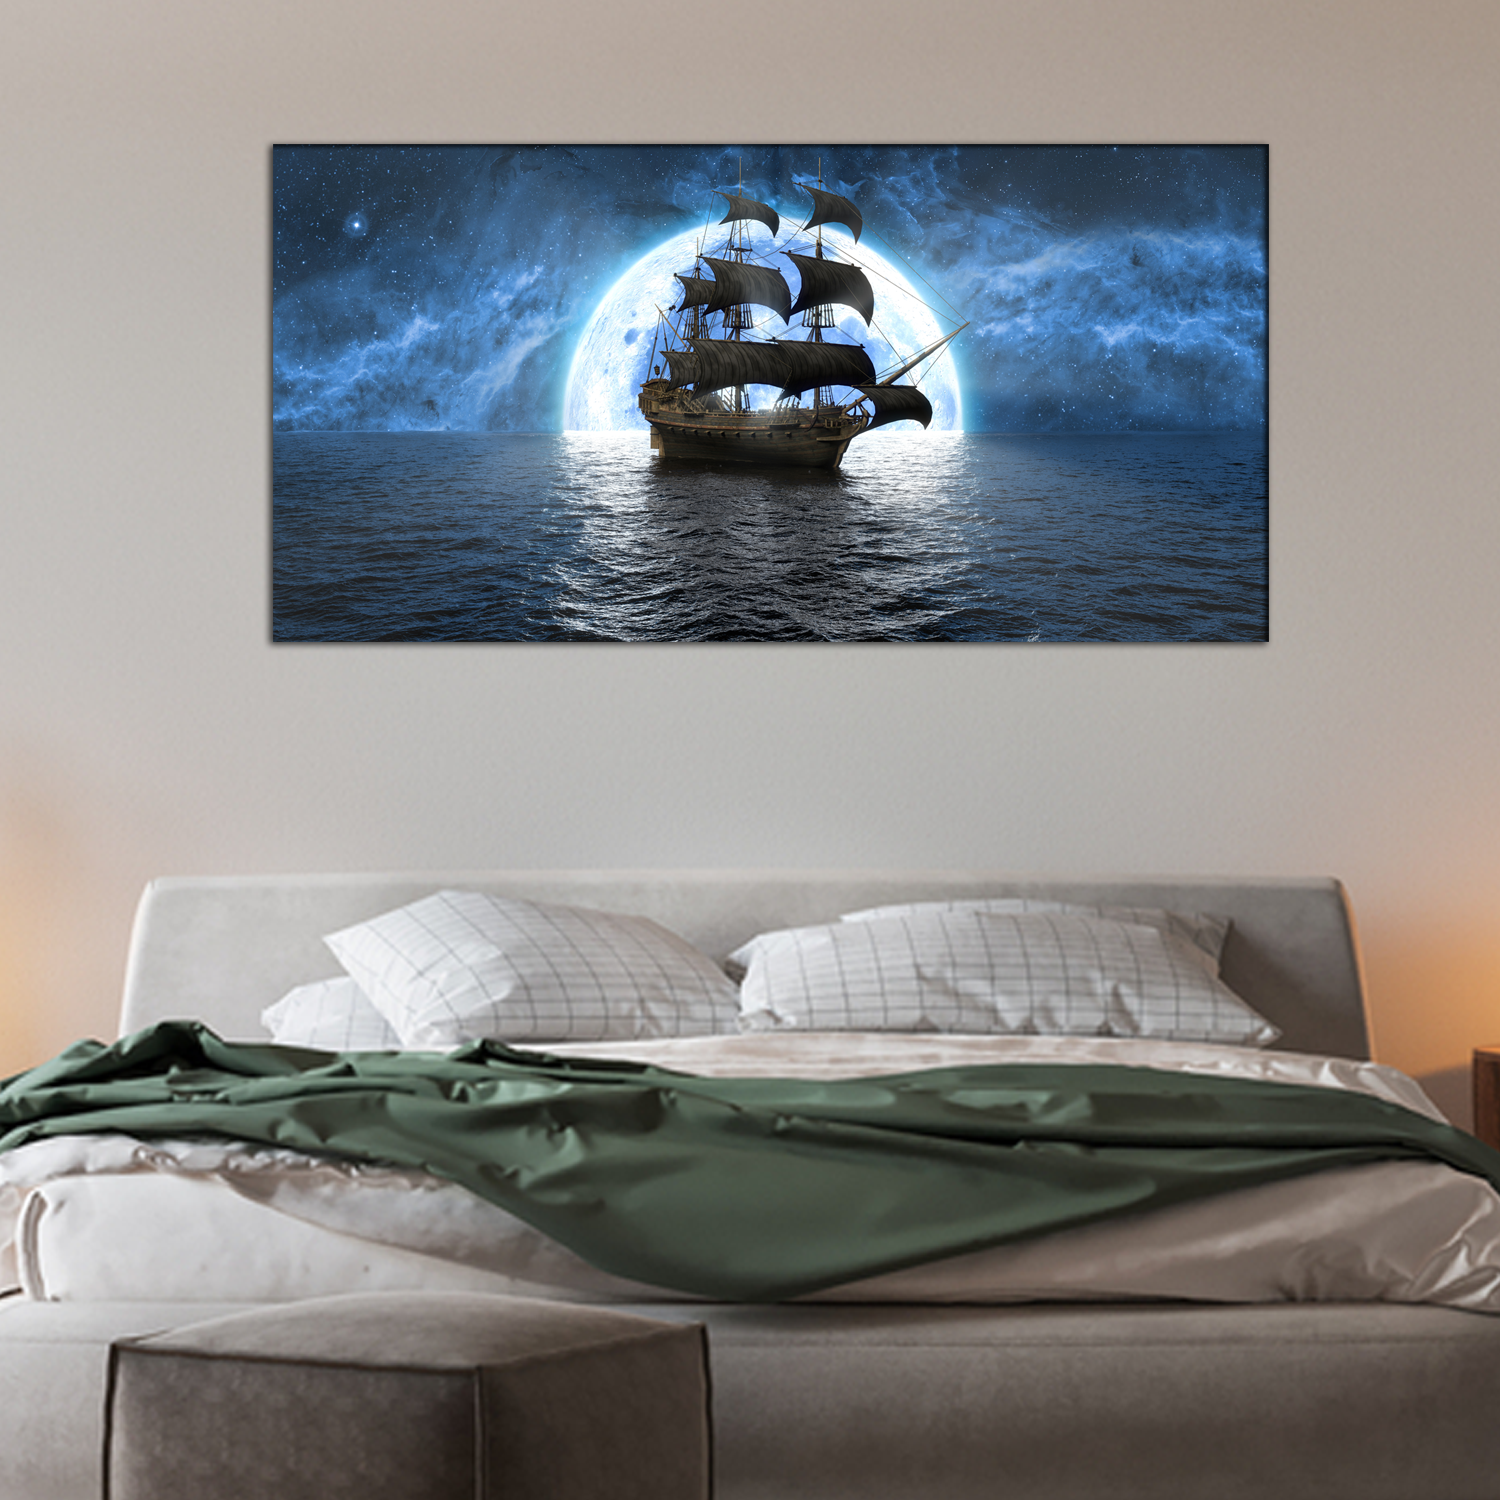 Ship at Sea with Large Moon Canvas Print Wall Painting